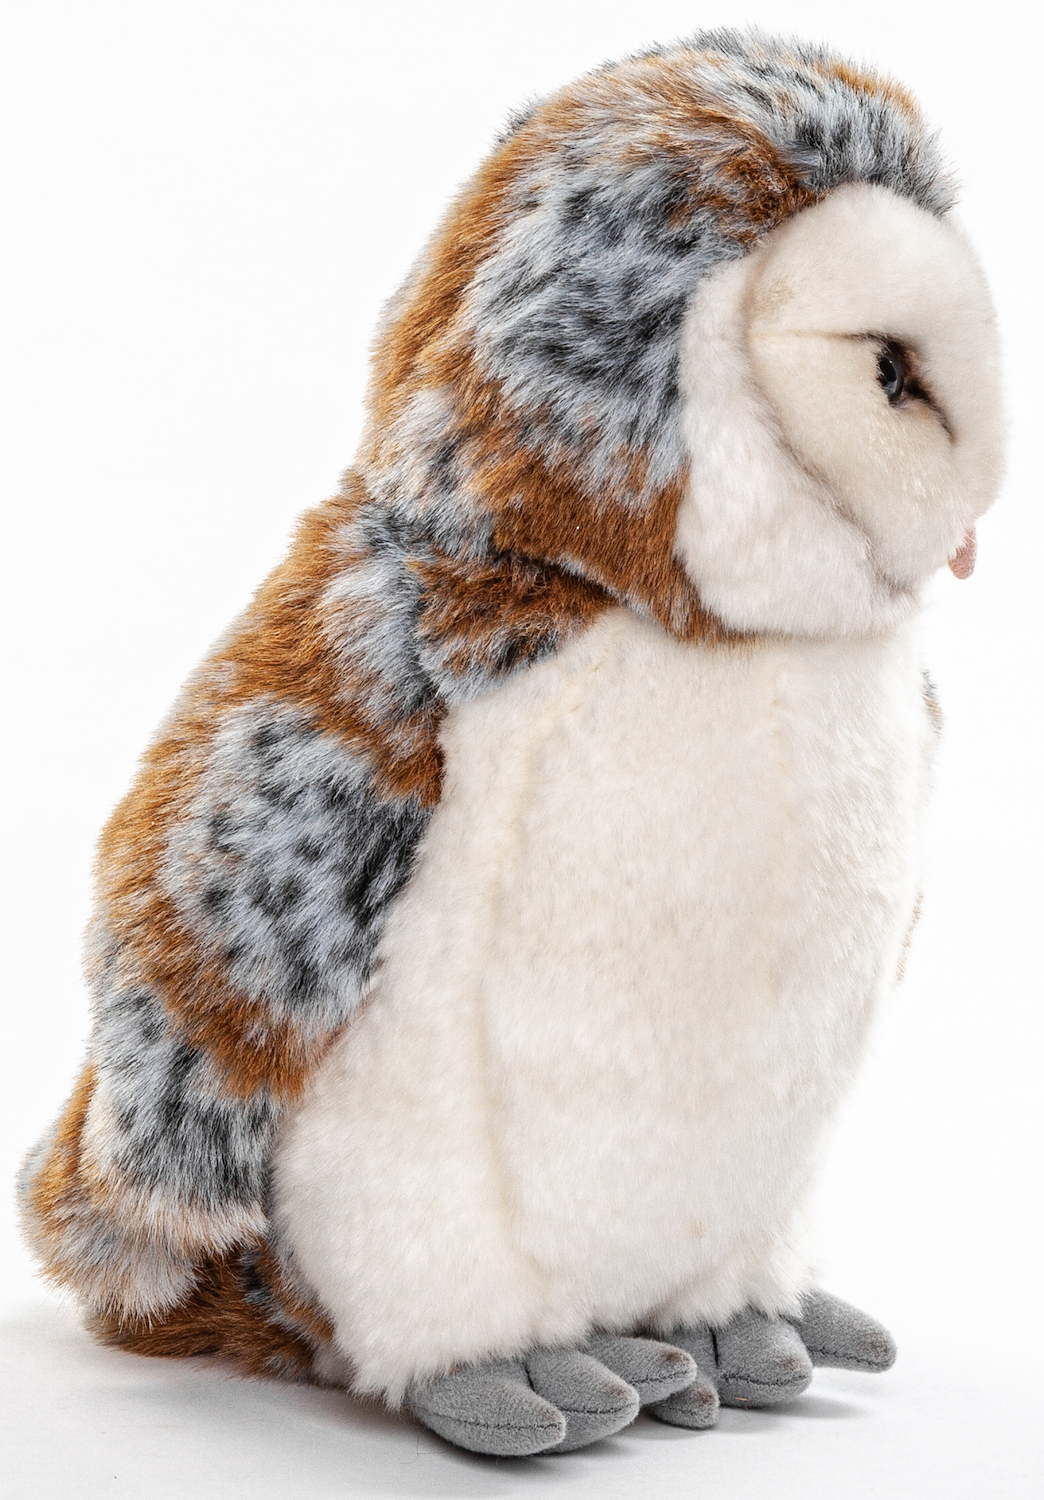 Barn Owl (Large) - 27 cm (height) - Plush Bird, Owl - Soft Toy, Cuddly Toy